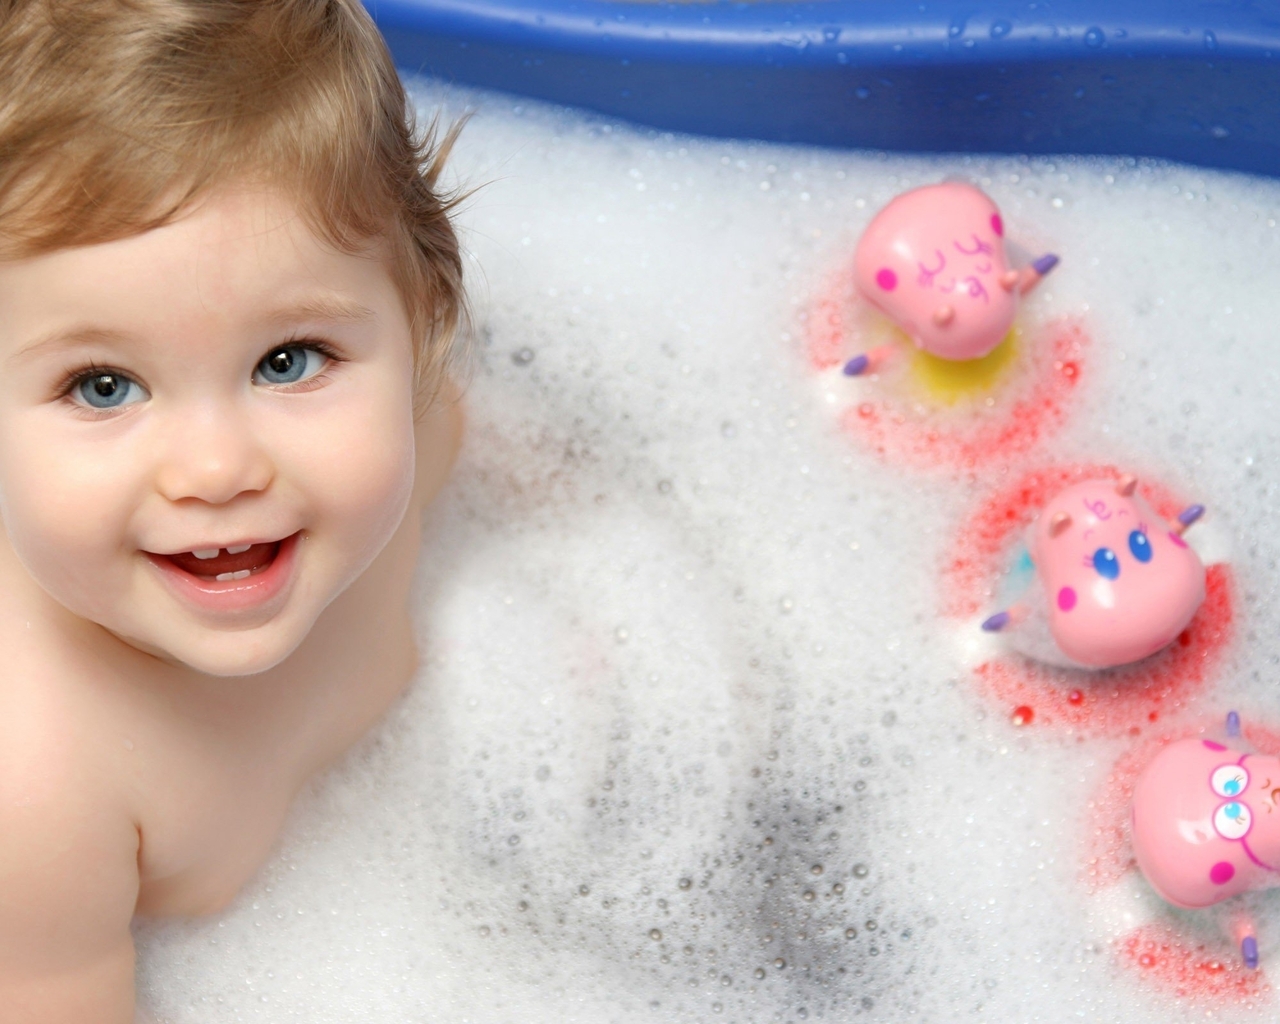 Image: Little girl, baby, bathing, bath, foam, toy, joy, smile